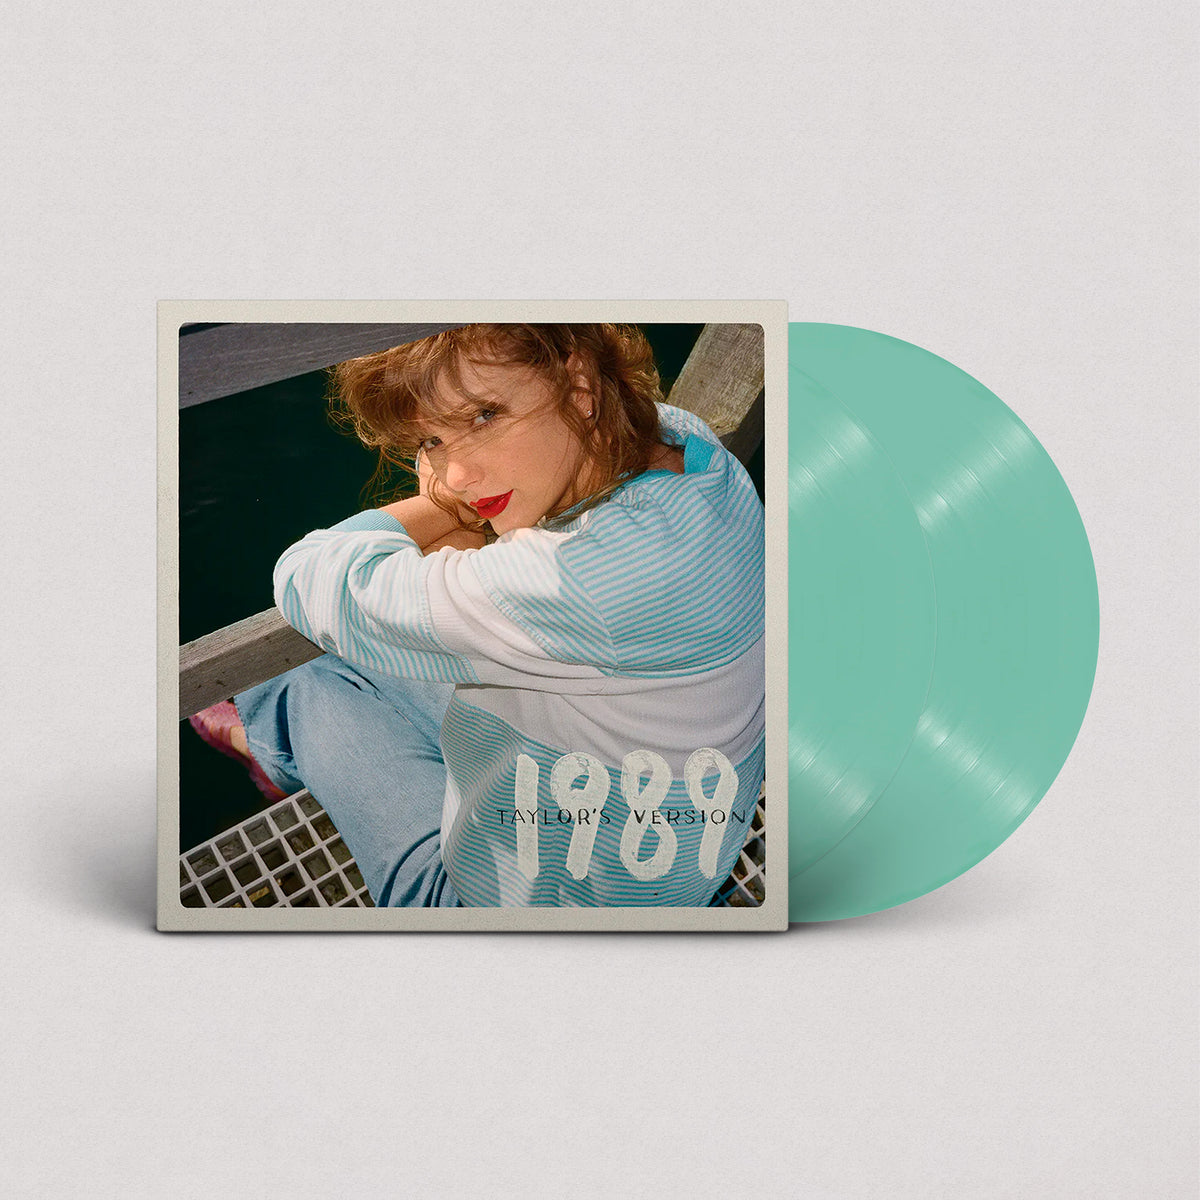 Taylor Swift - 1989 "Taylor's Version" (Aquamarine Green Edition, Vinilo 2'LP)